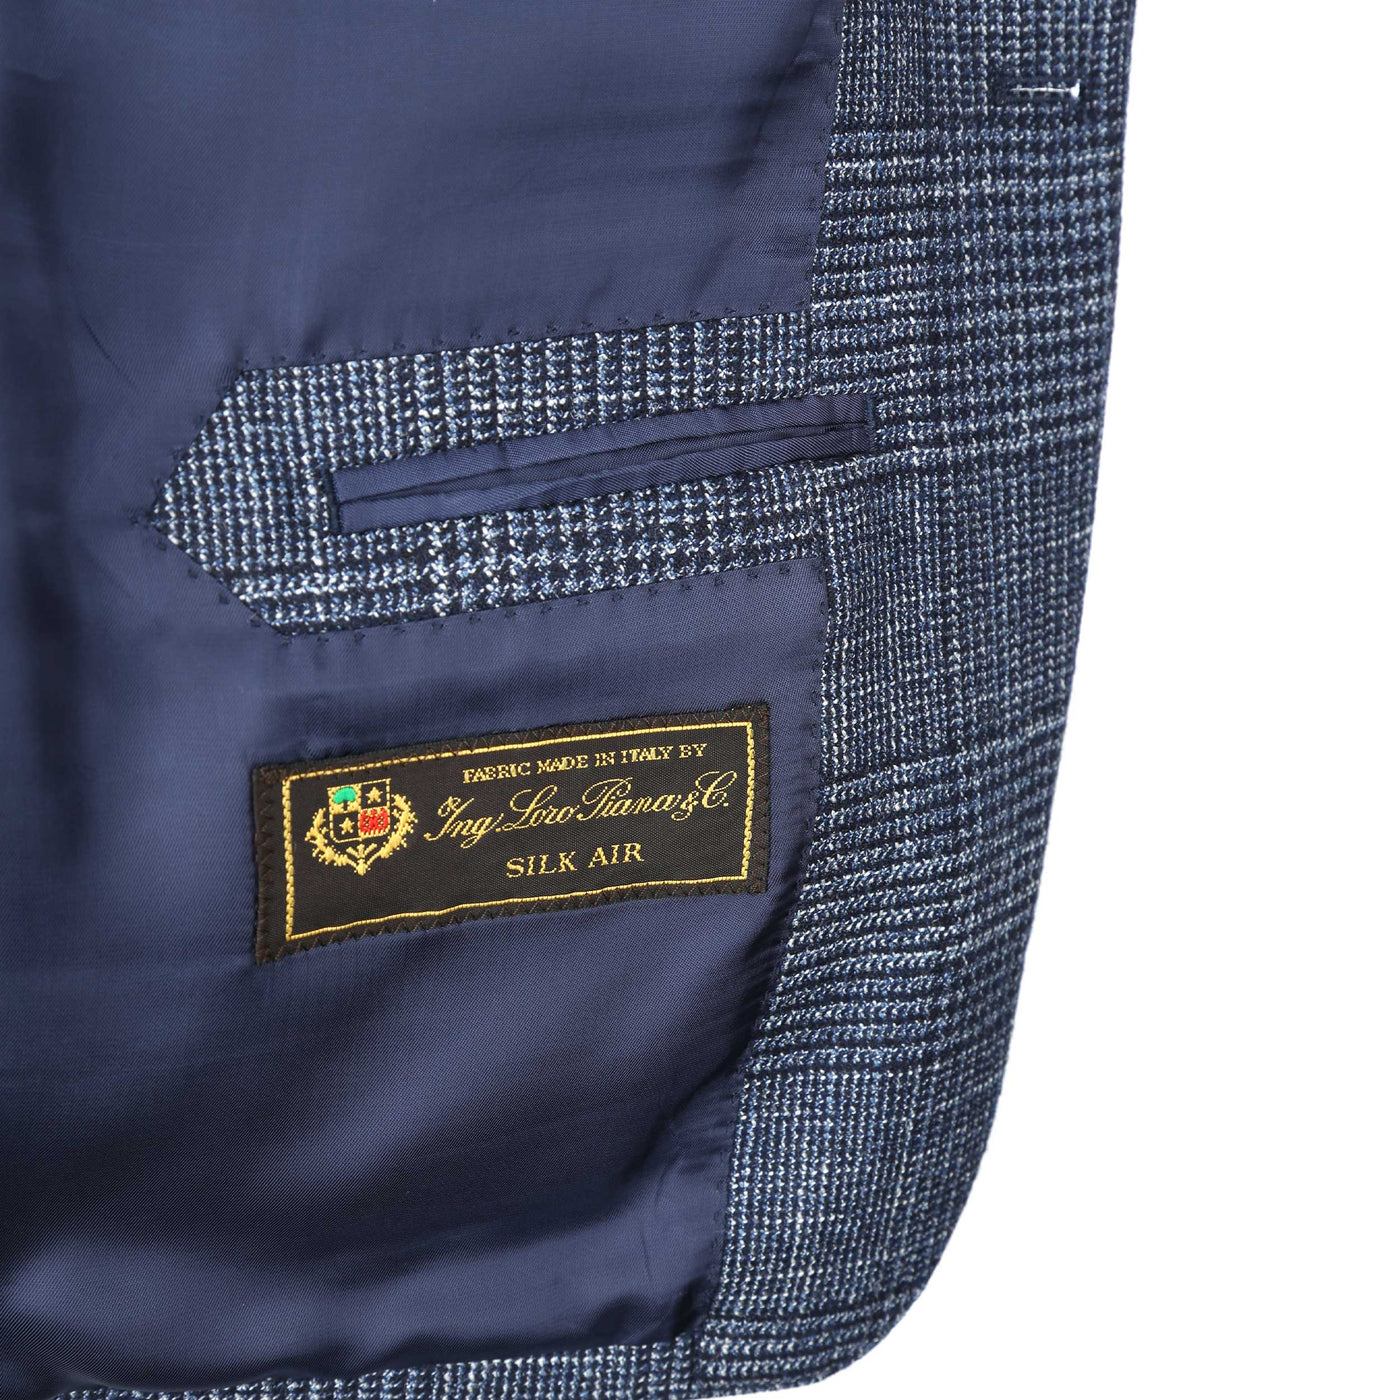 Norton Barrie Bespoke Jacket in Navy Check Lora Piana 8838 Detail